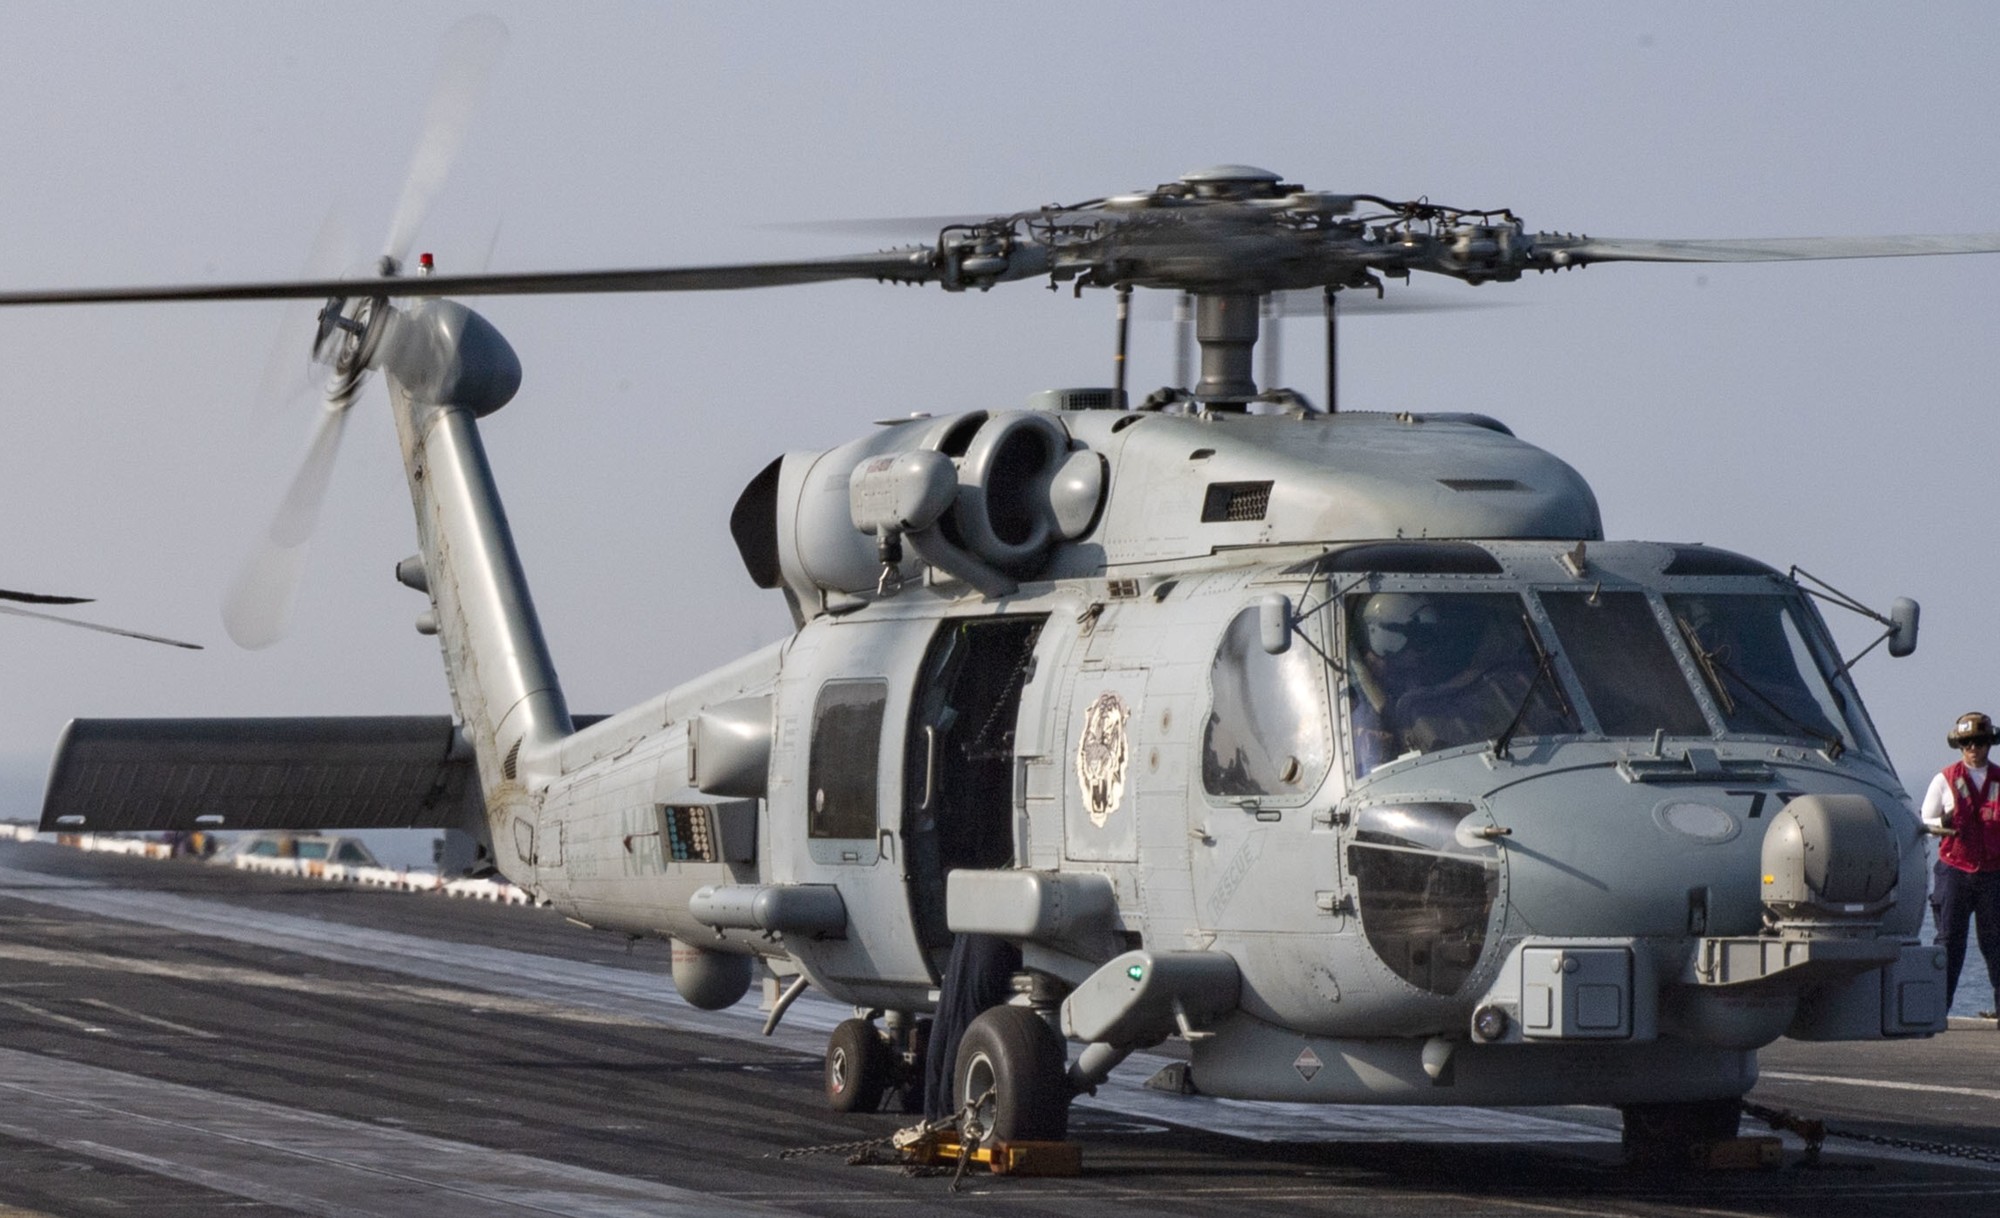 hsm-73 battlecats helicopter maritime strike squadron us navy mh-60r seahawk 2014 50 carrier air wing cvw-17 uss carl vinson cvn-70